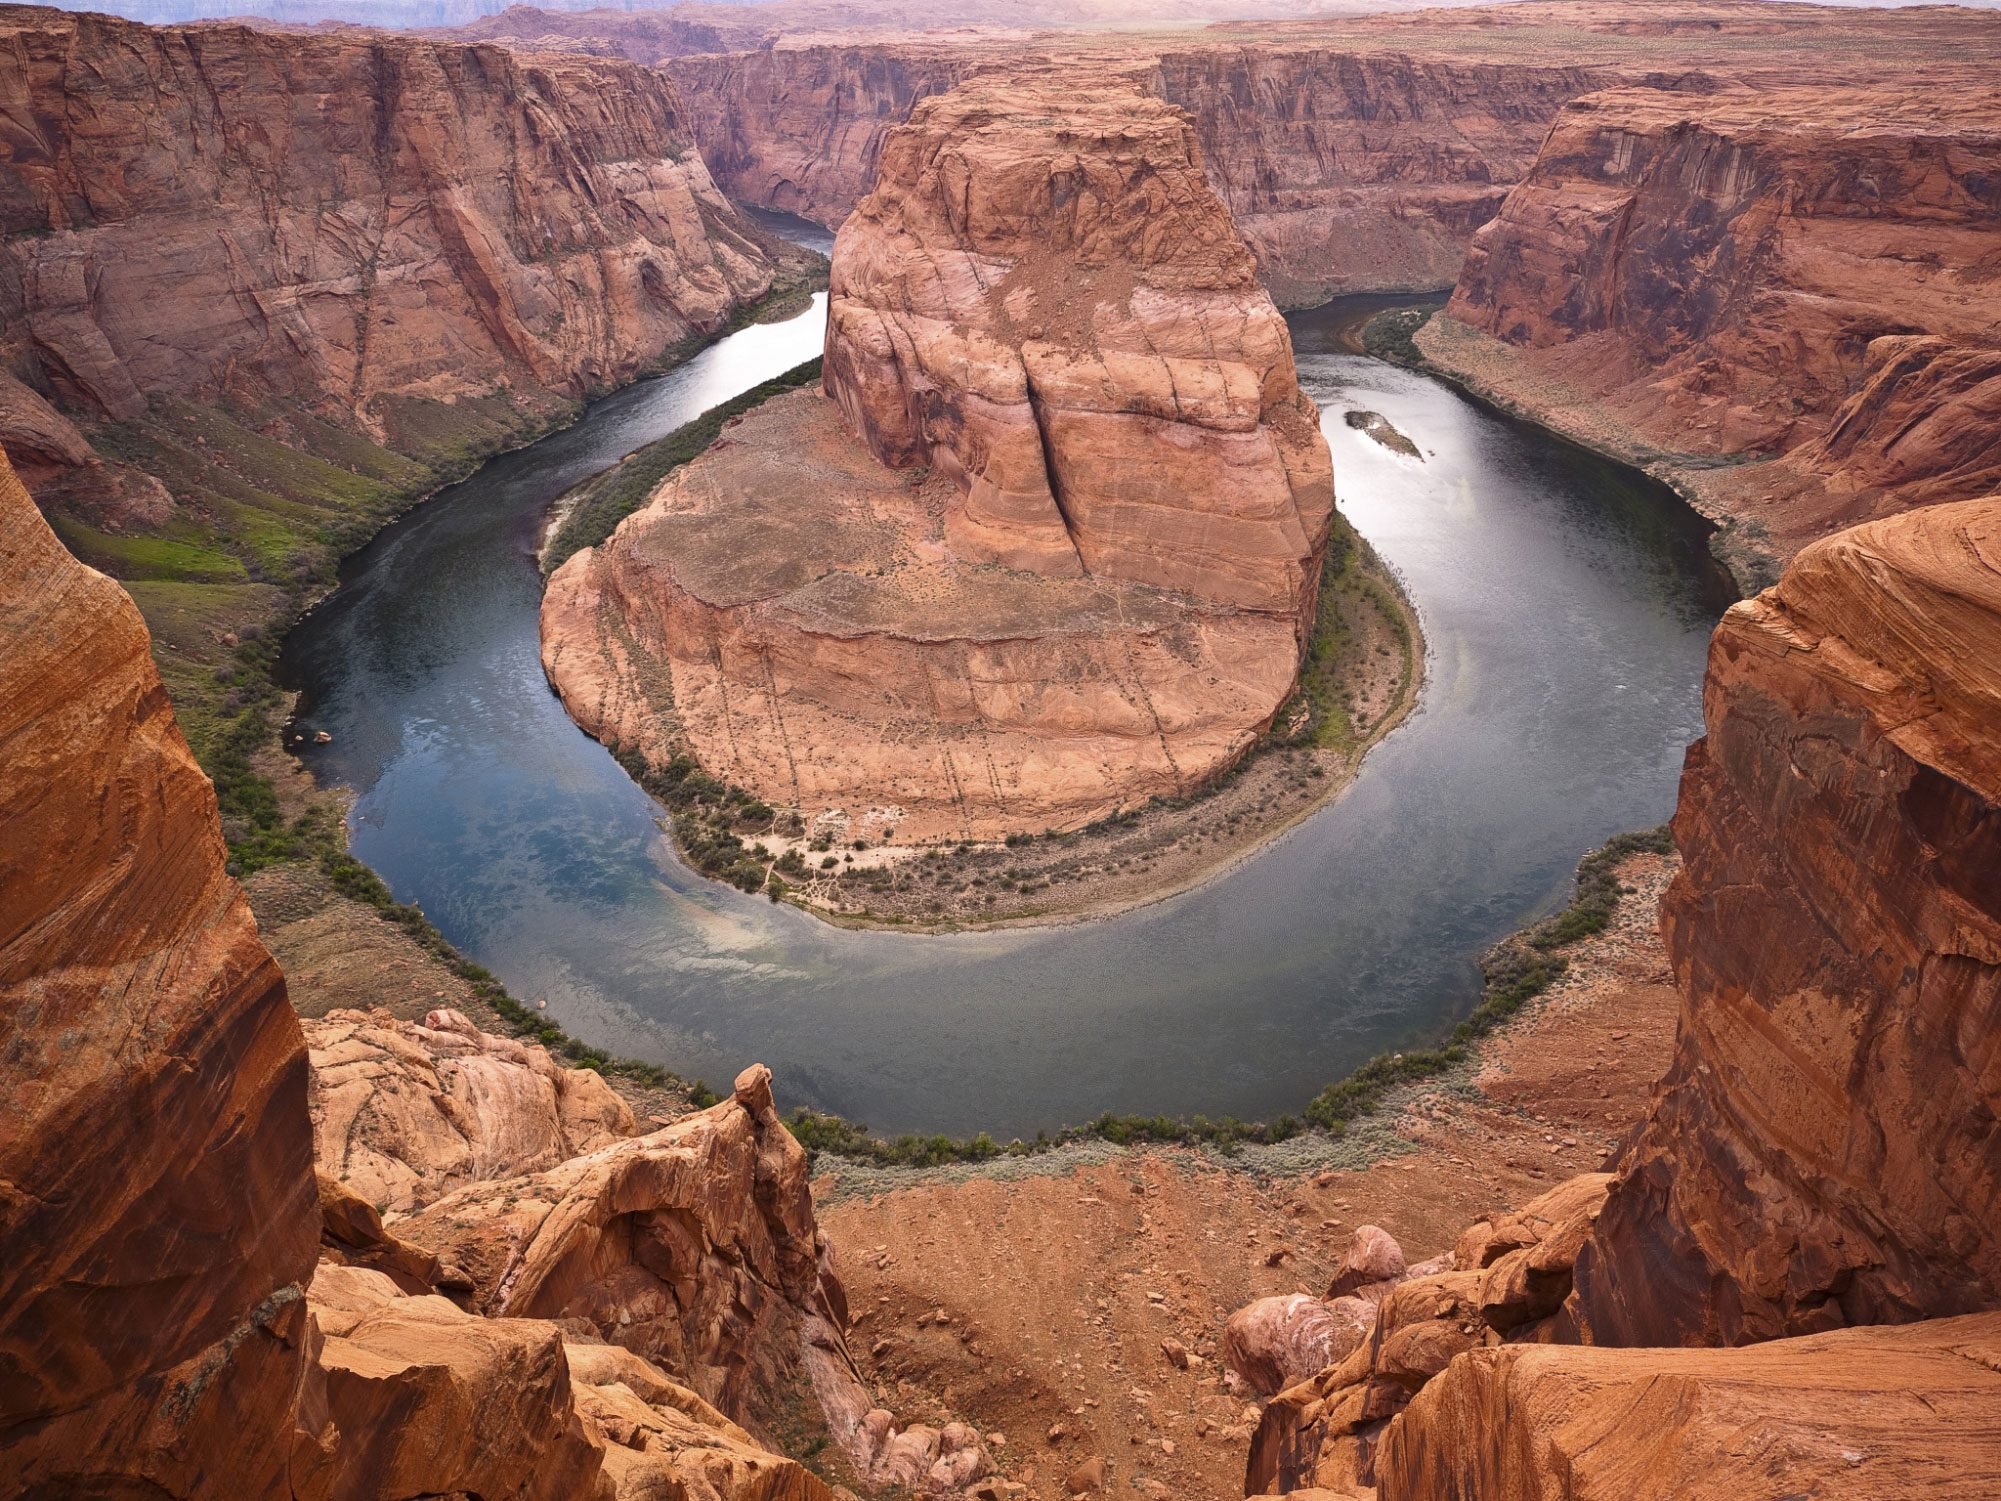 Kayaking or Rafting the Grand Canyon